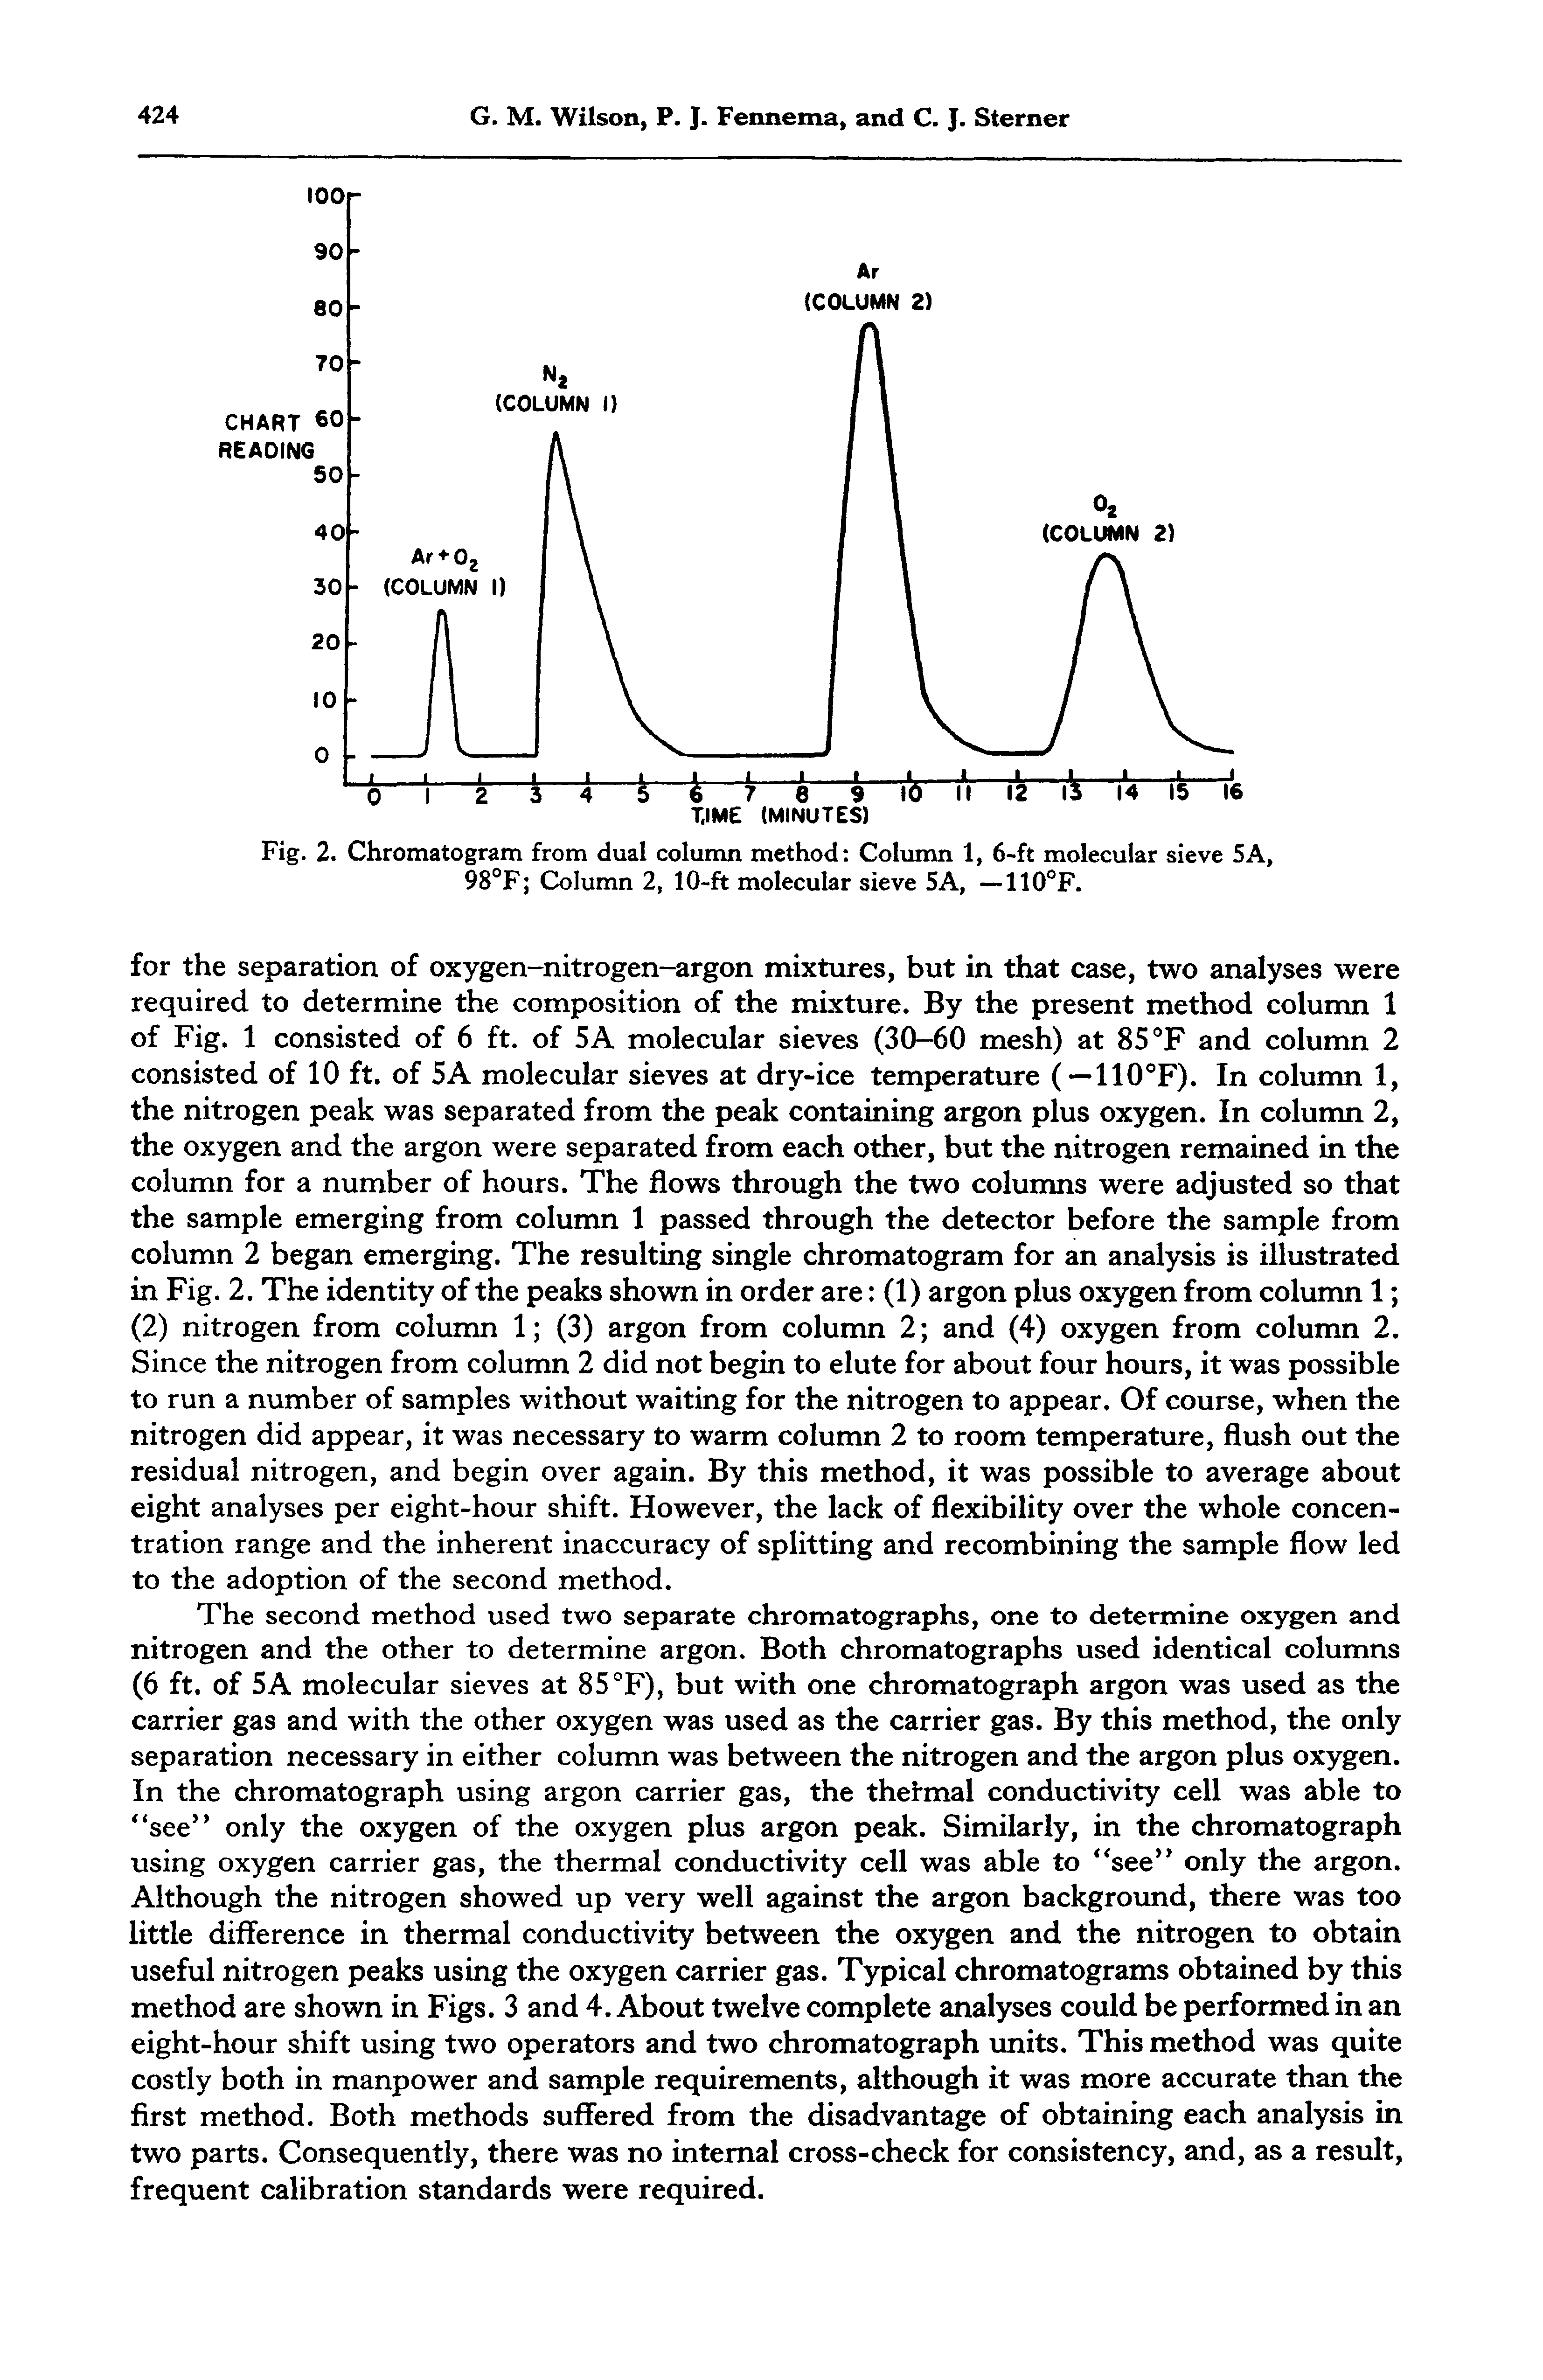 Fig. 2. Chromatogram from dual column method Column 1, 6-ft molecular sieve 5A, 98°F Column 2, 10-ft molecular sieve 5A, — 110°F.